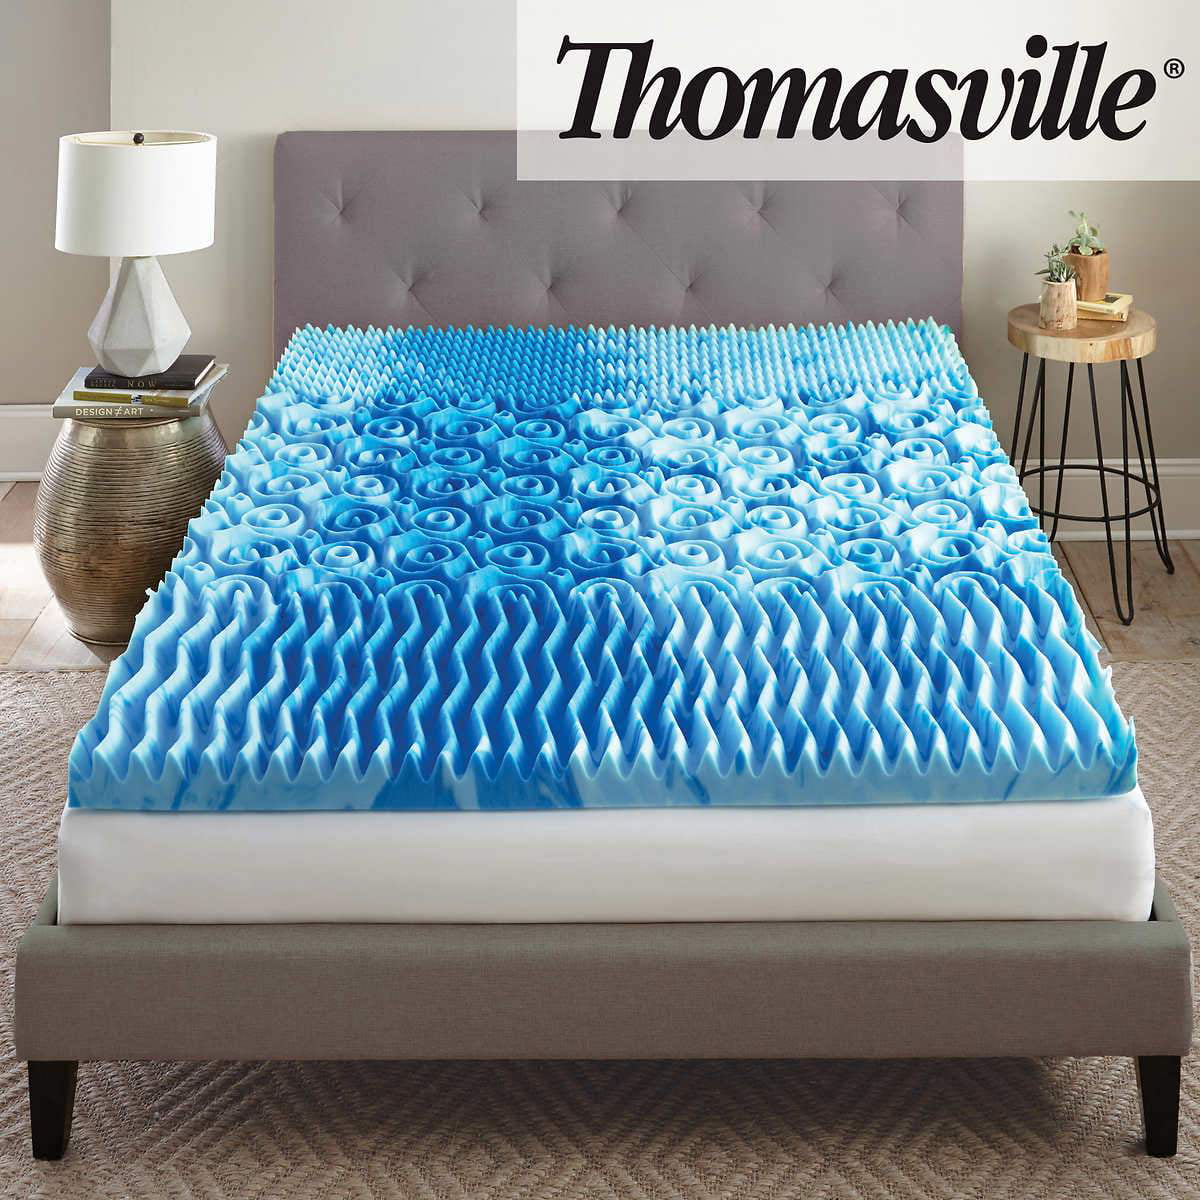 Thomasville 3" Cool Trizone Gel Memory Foam Mattress